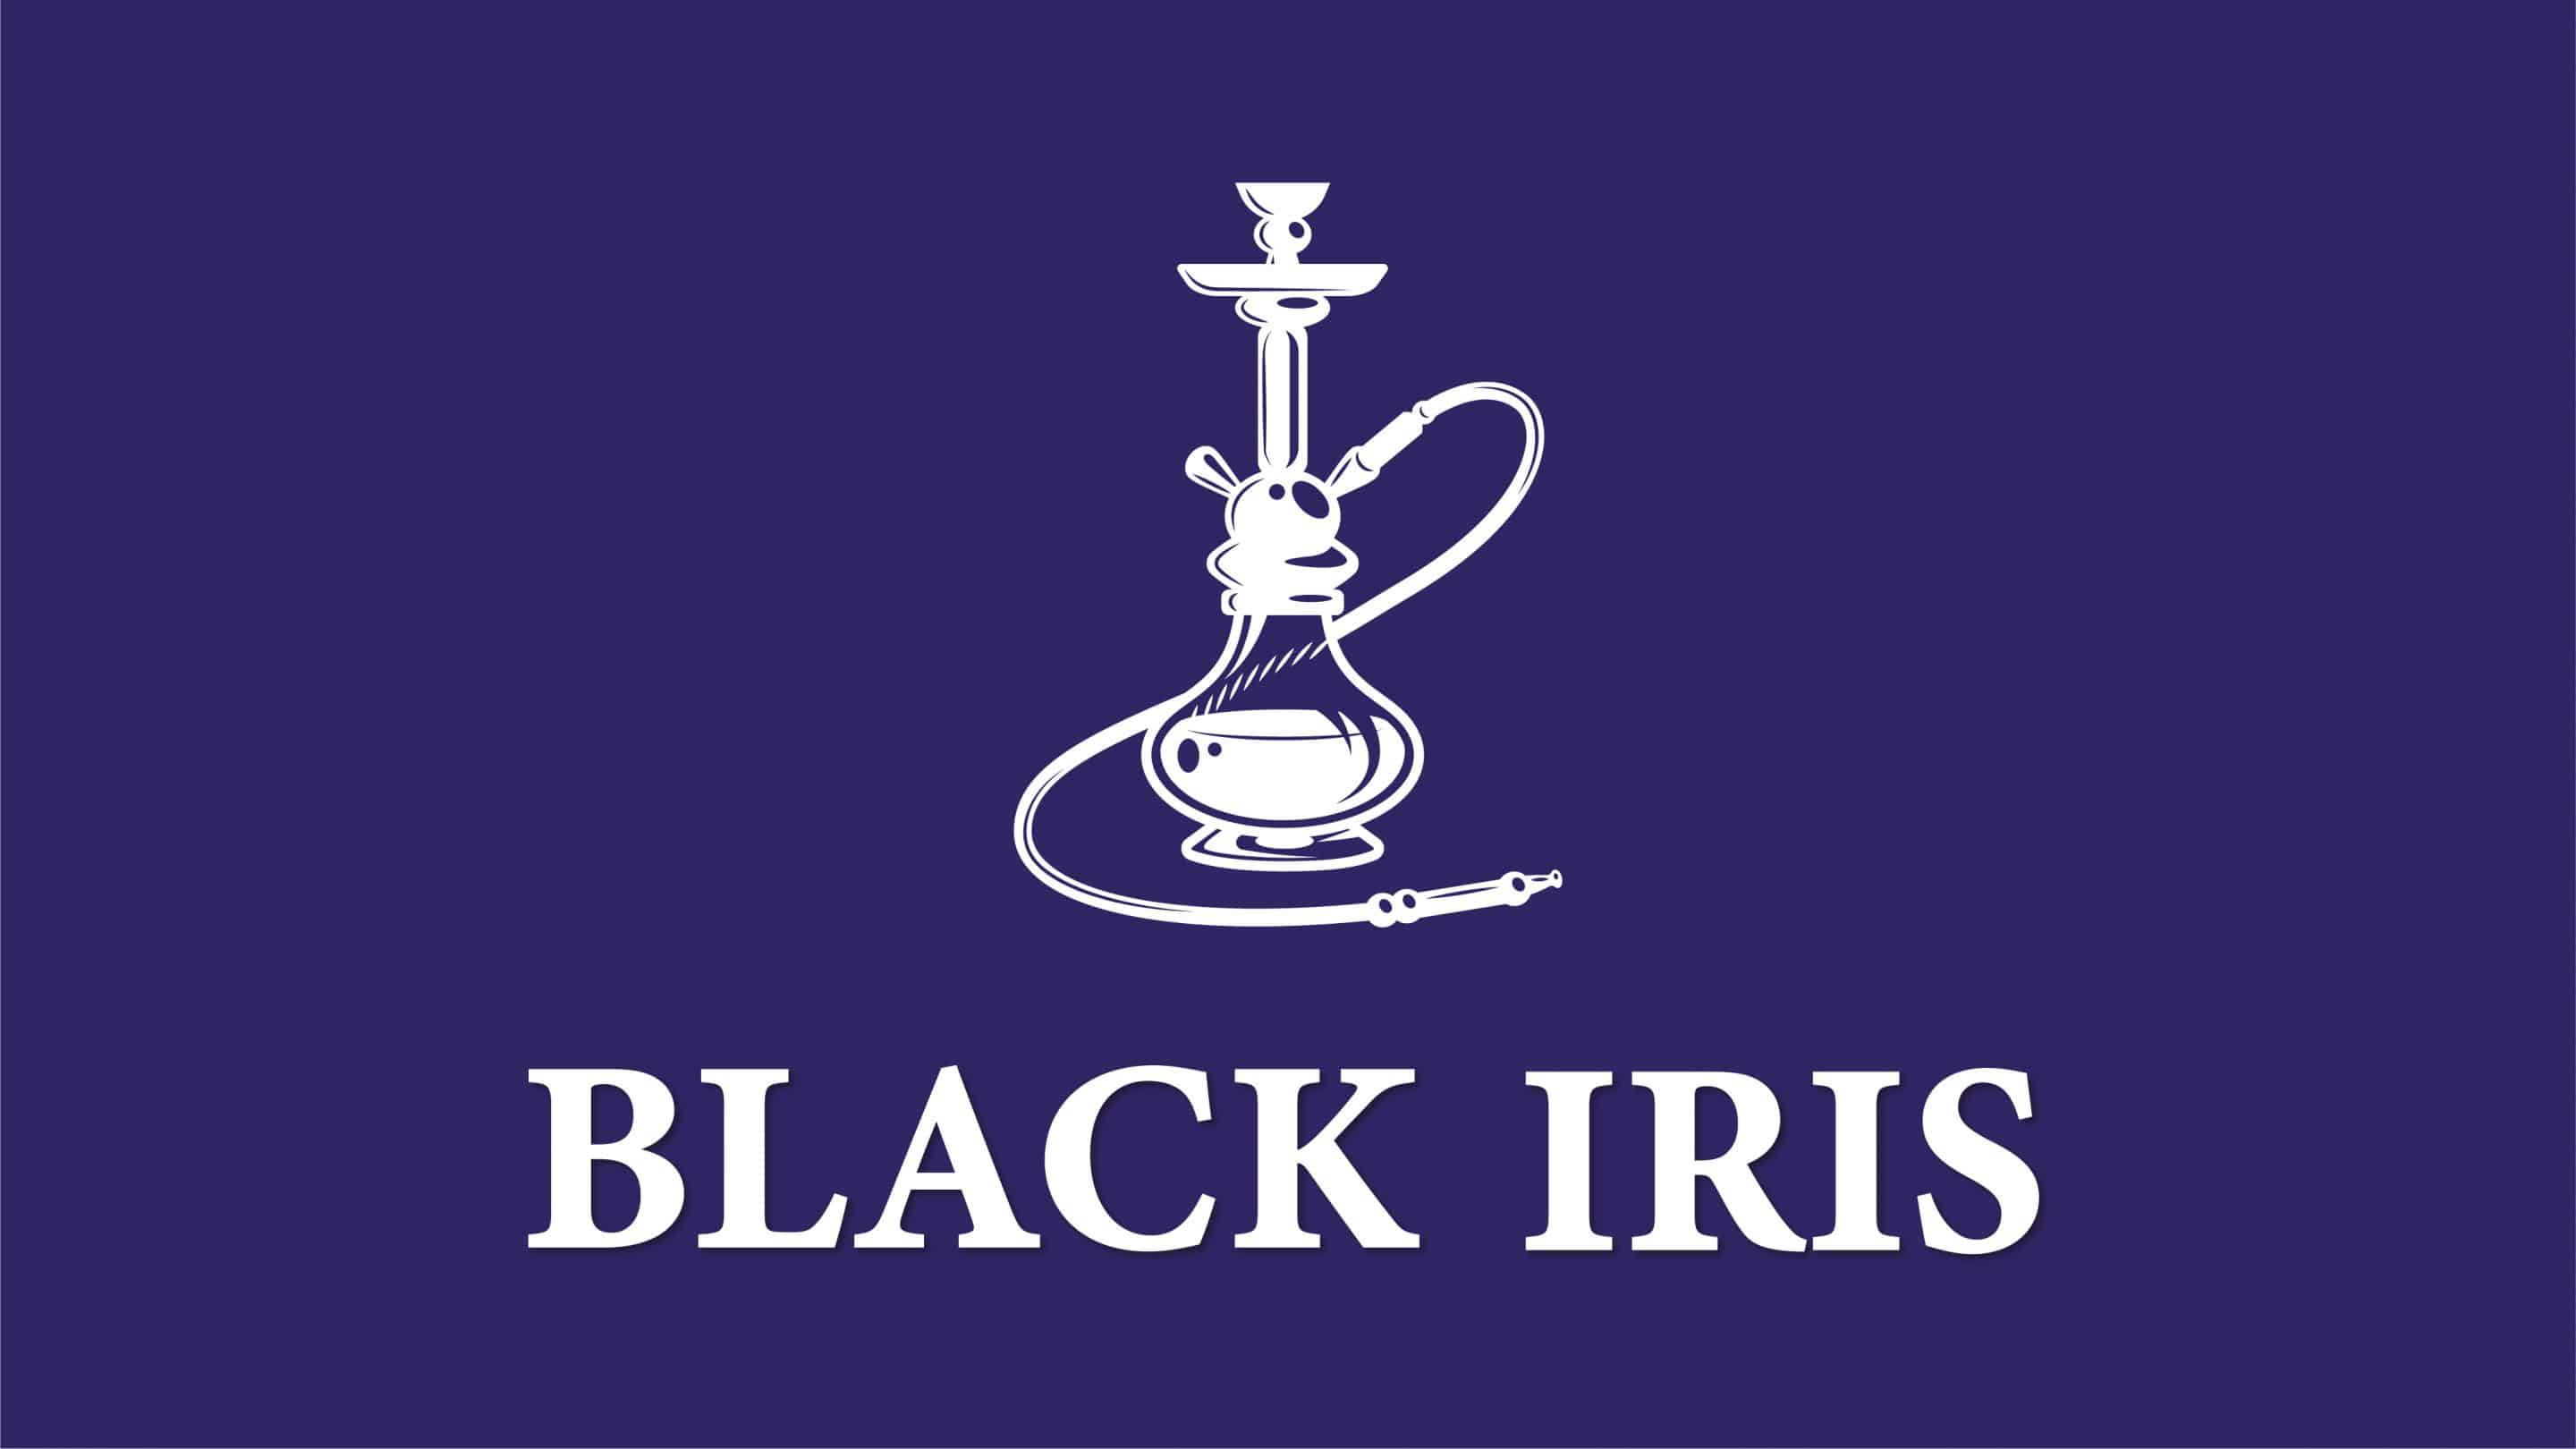 Black iris logo